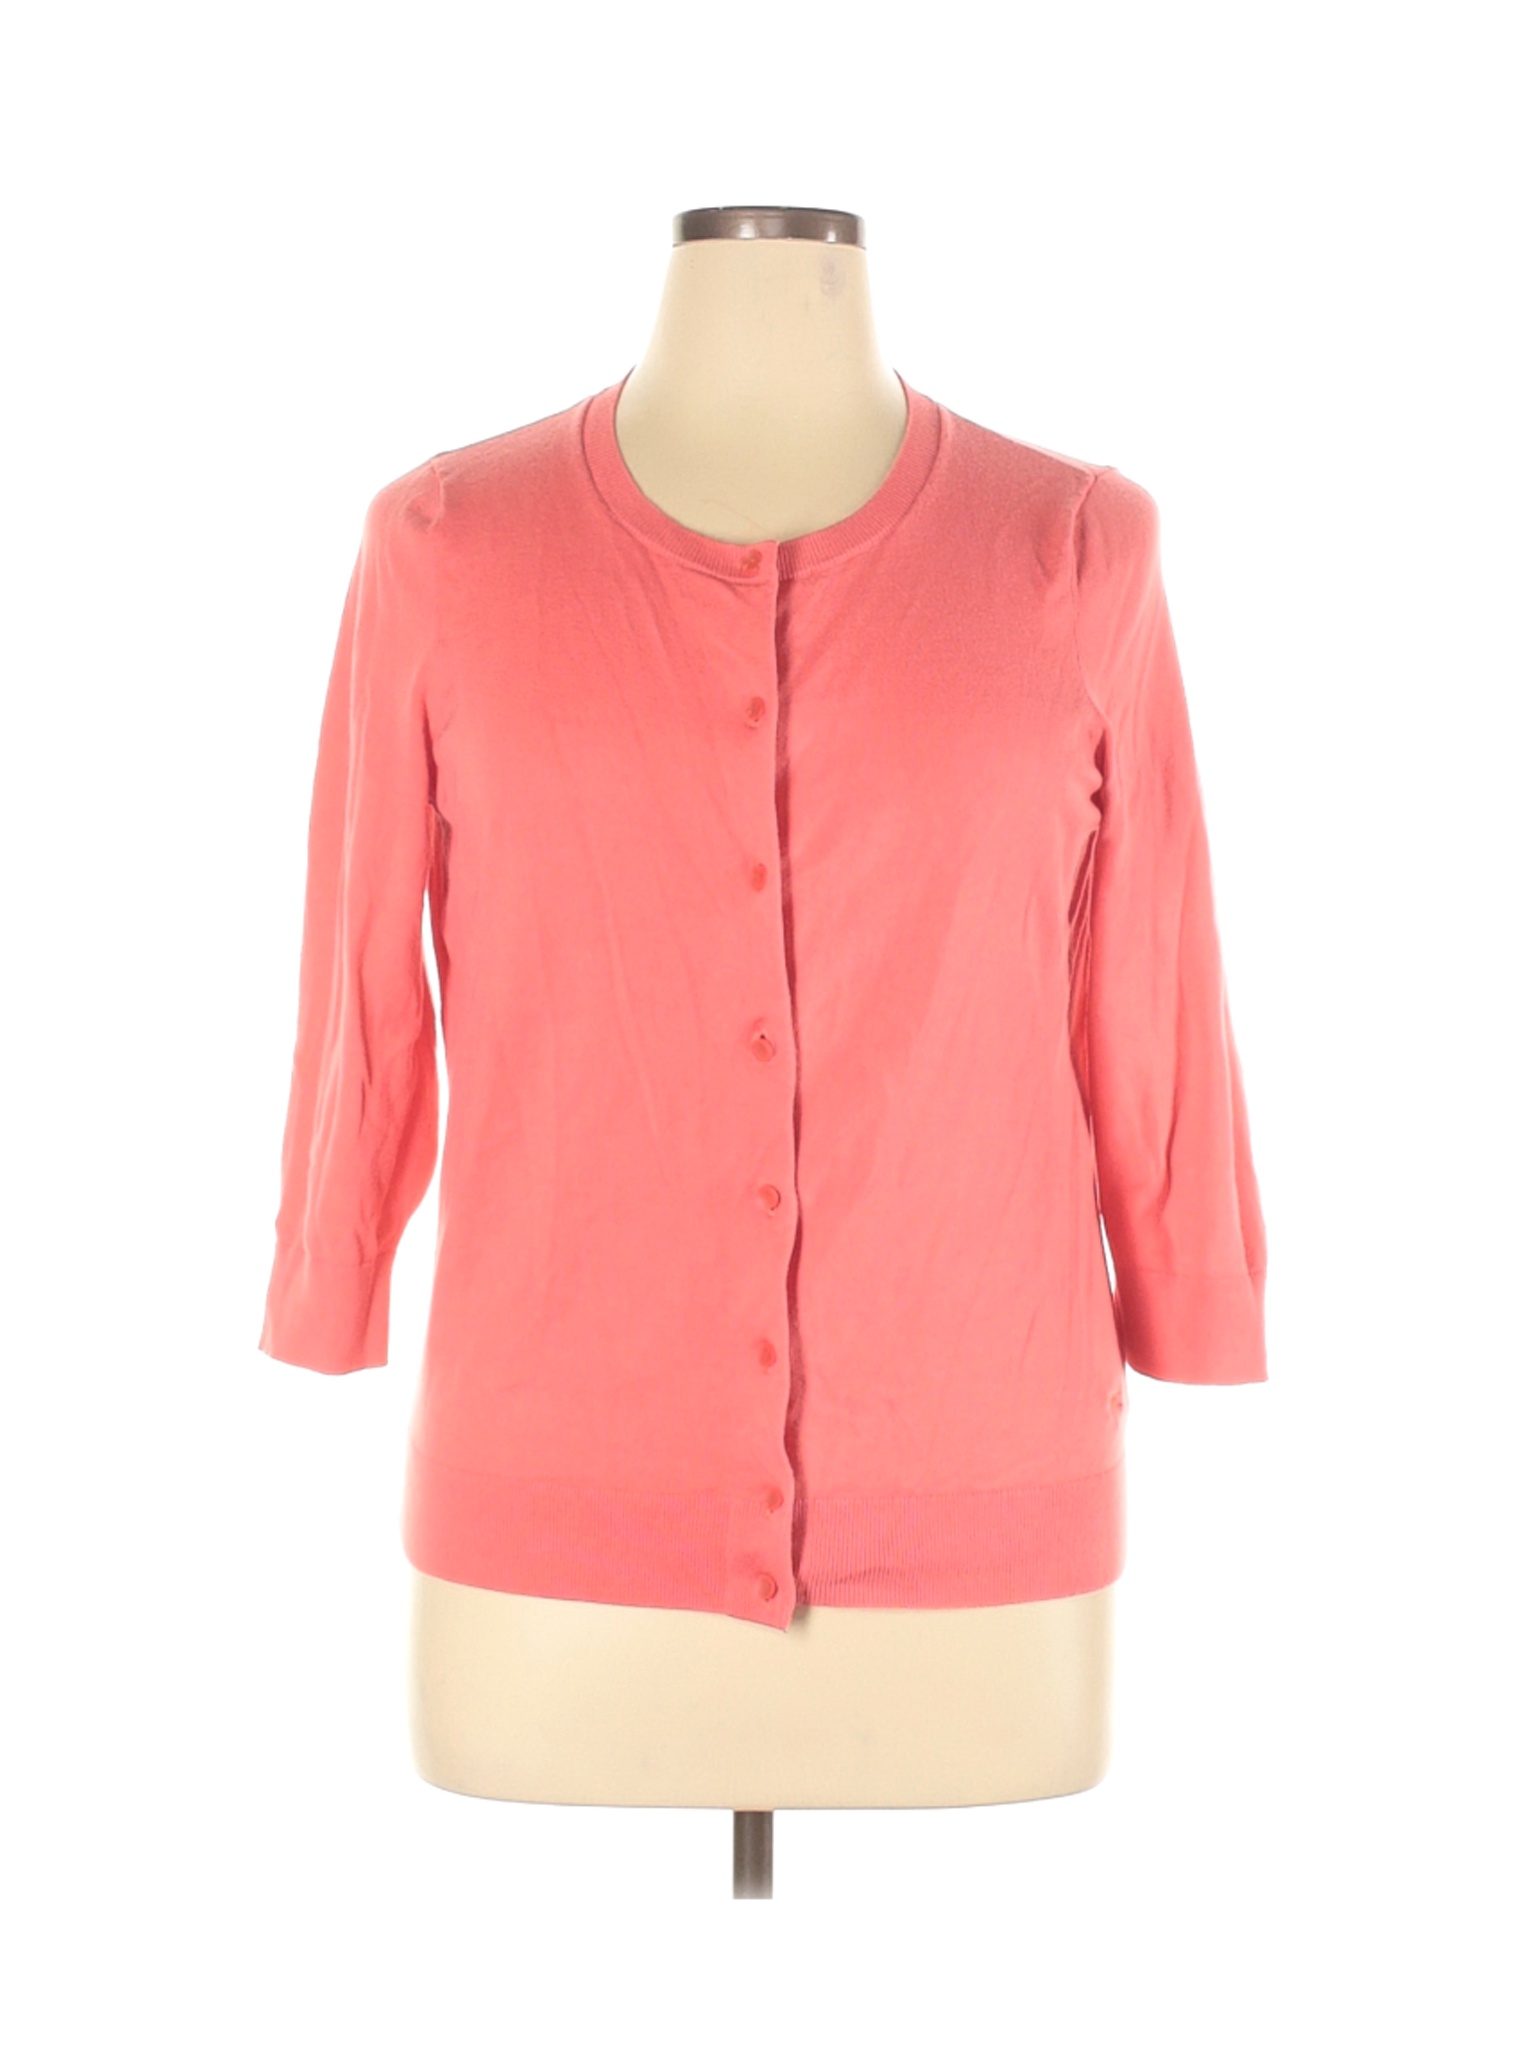 Talbots Women Pink Cardigan XL | eBay